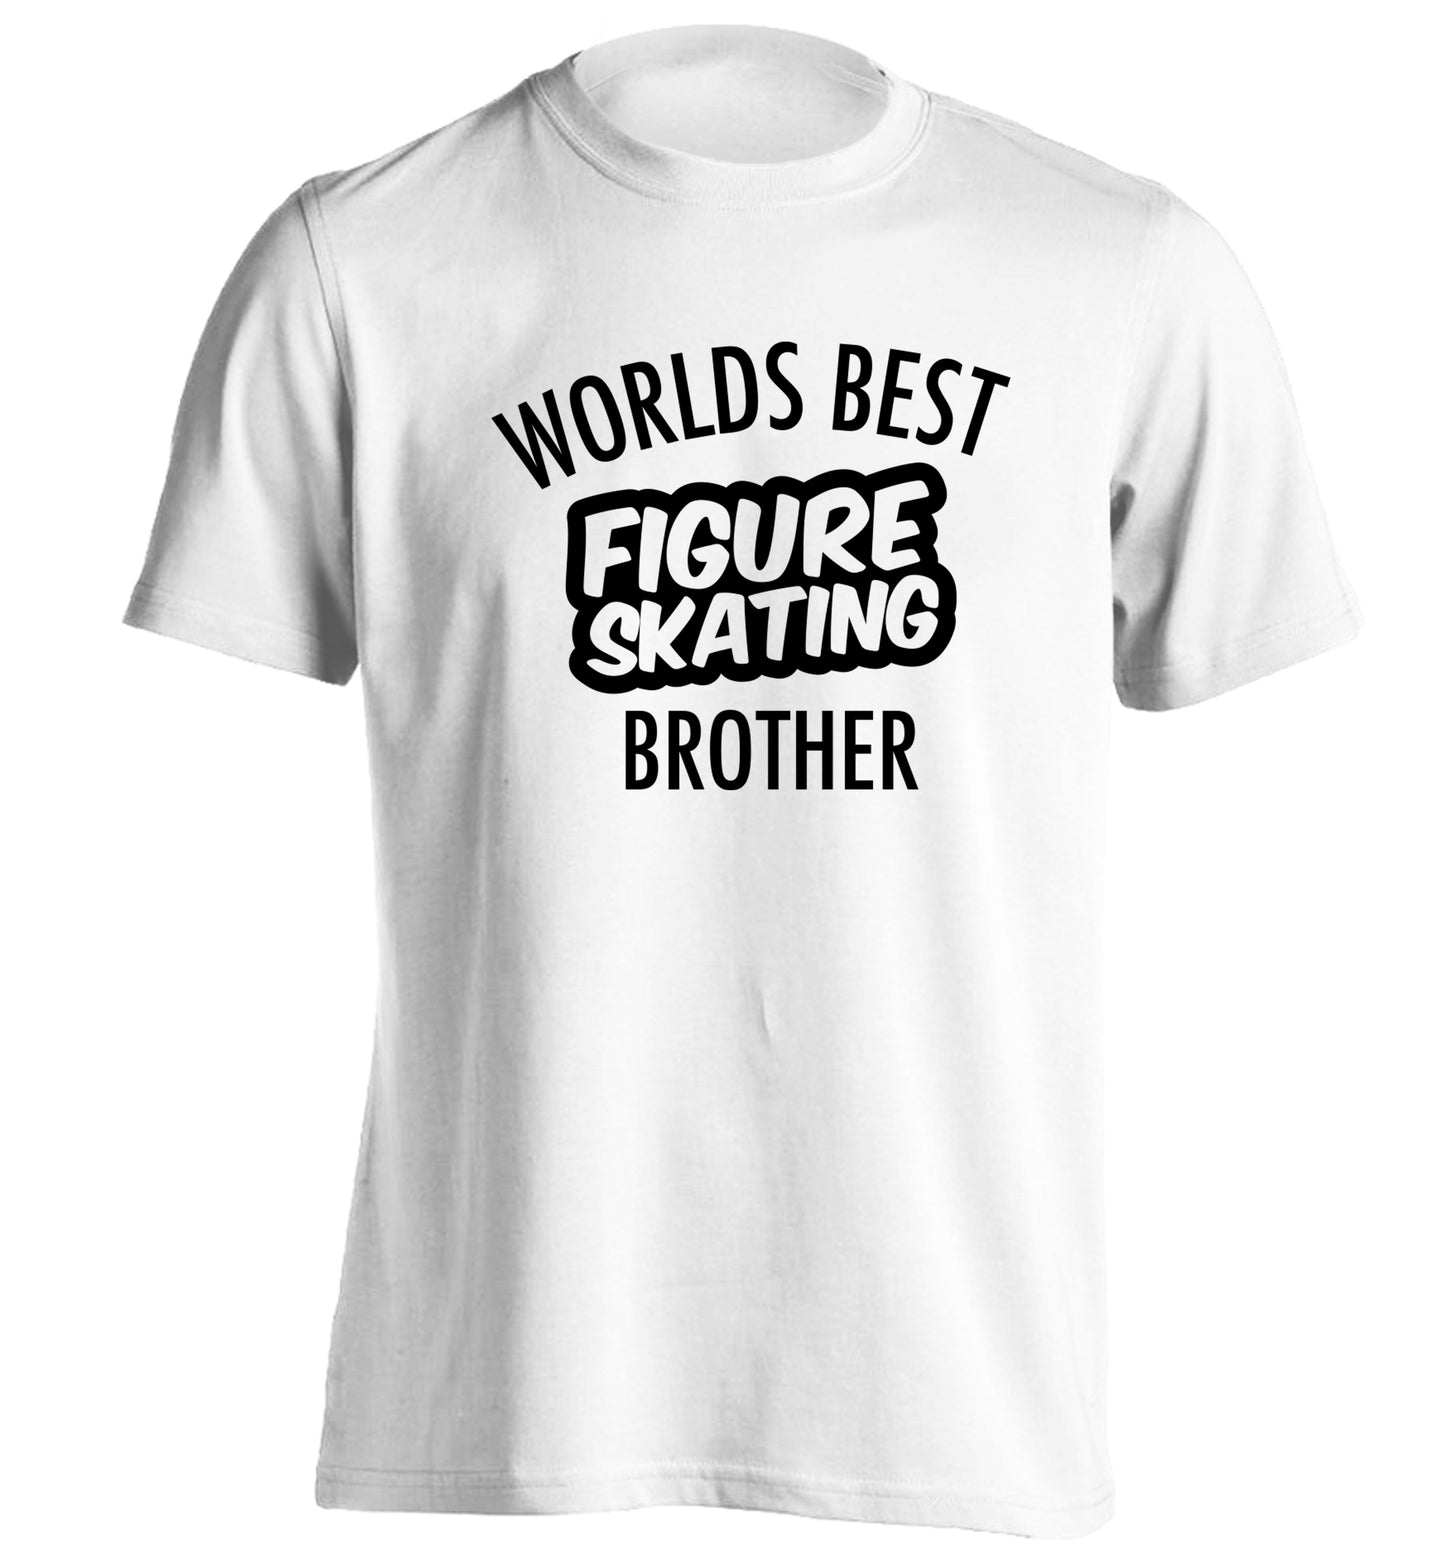 Worlds best figure skating brother adults unisexwhite Tshirt 2XL